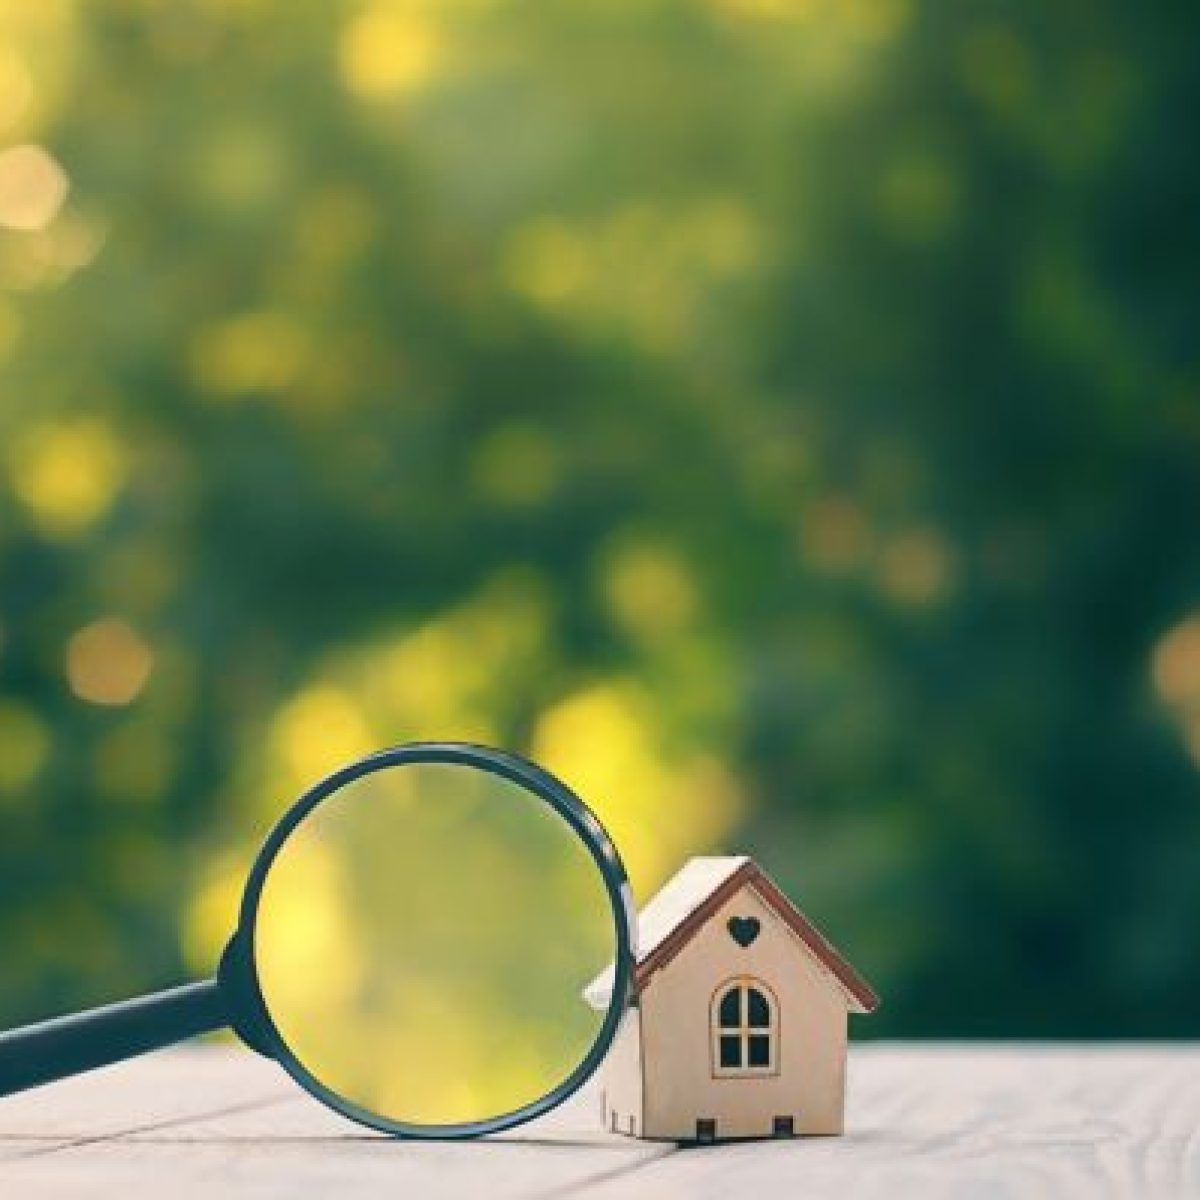 Should I get a property survey when I buy a house?